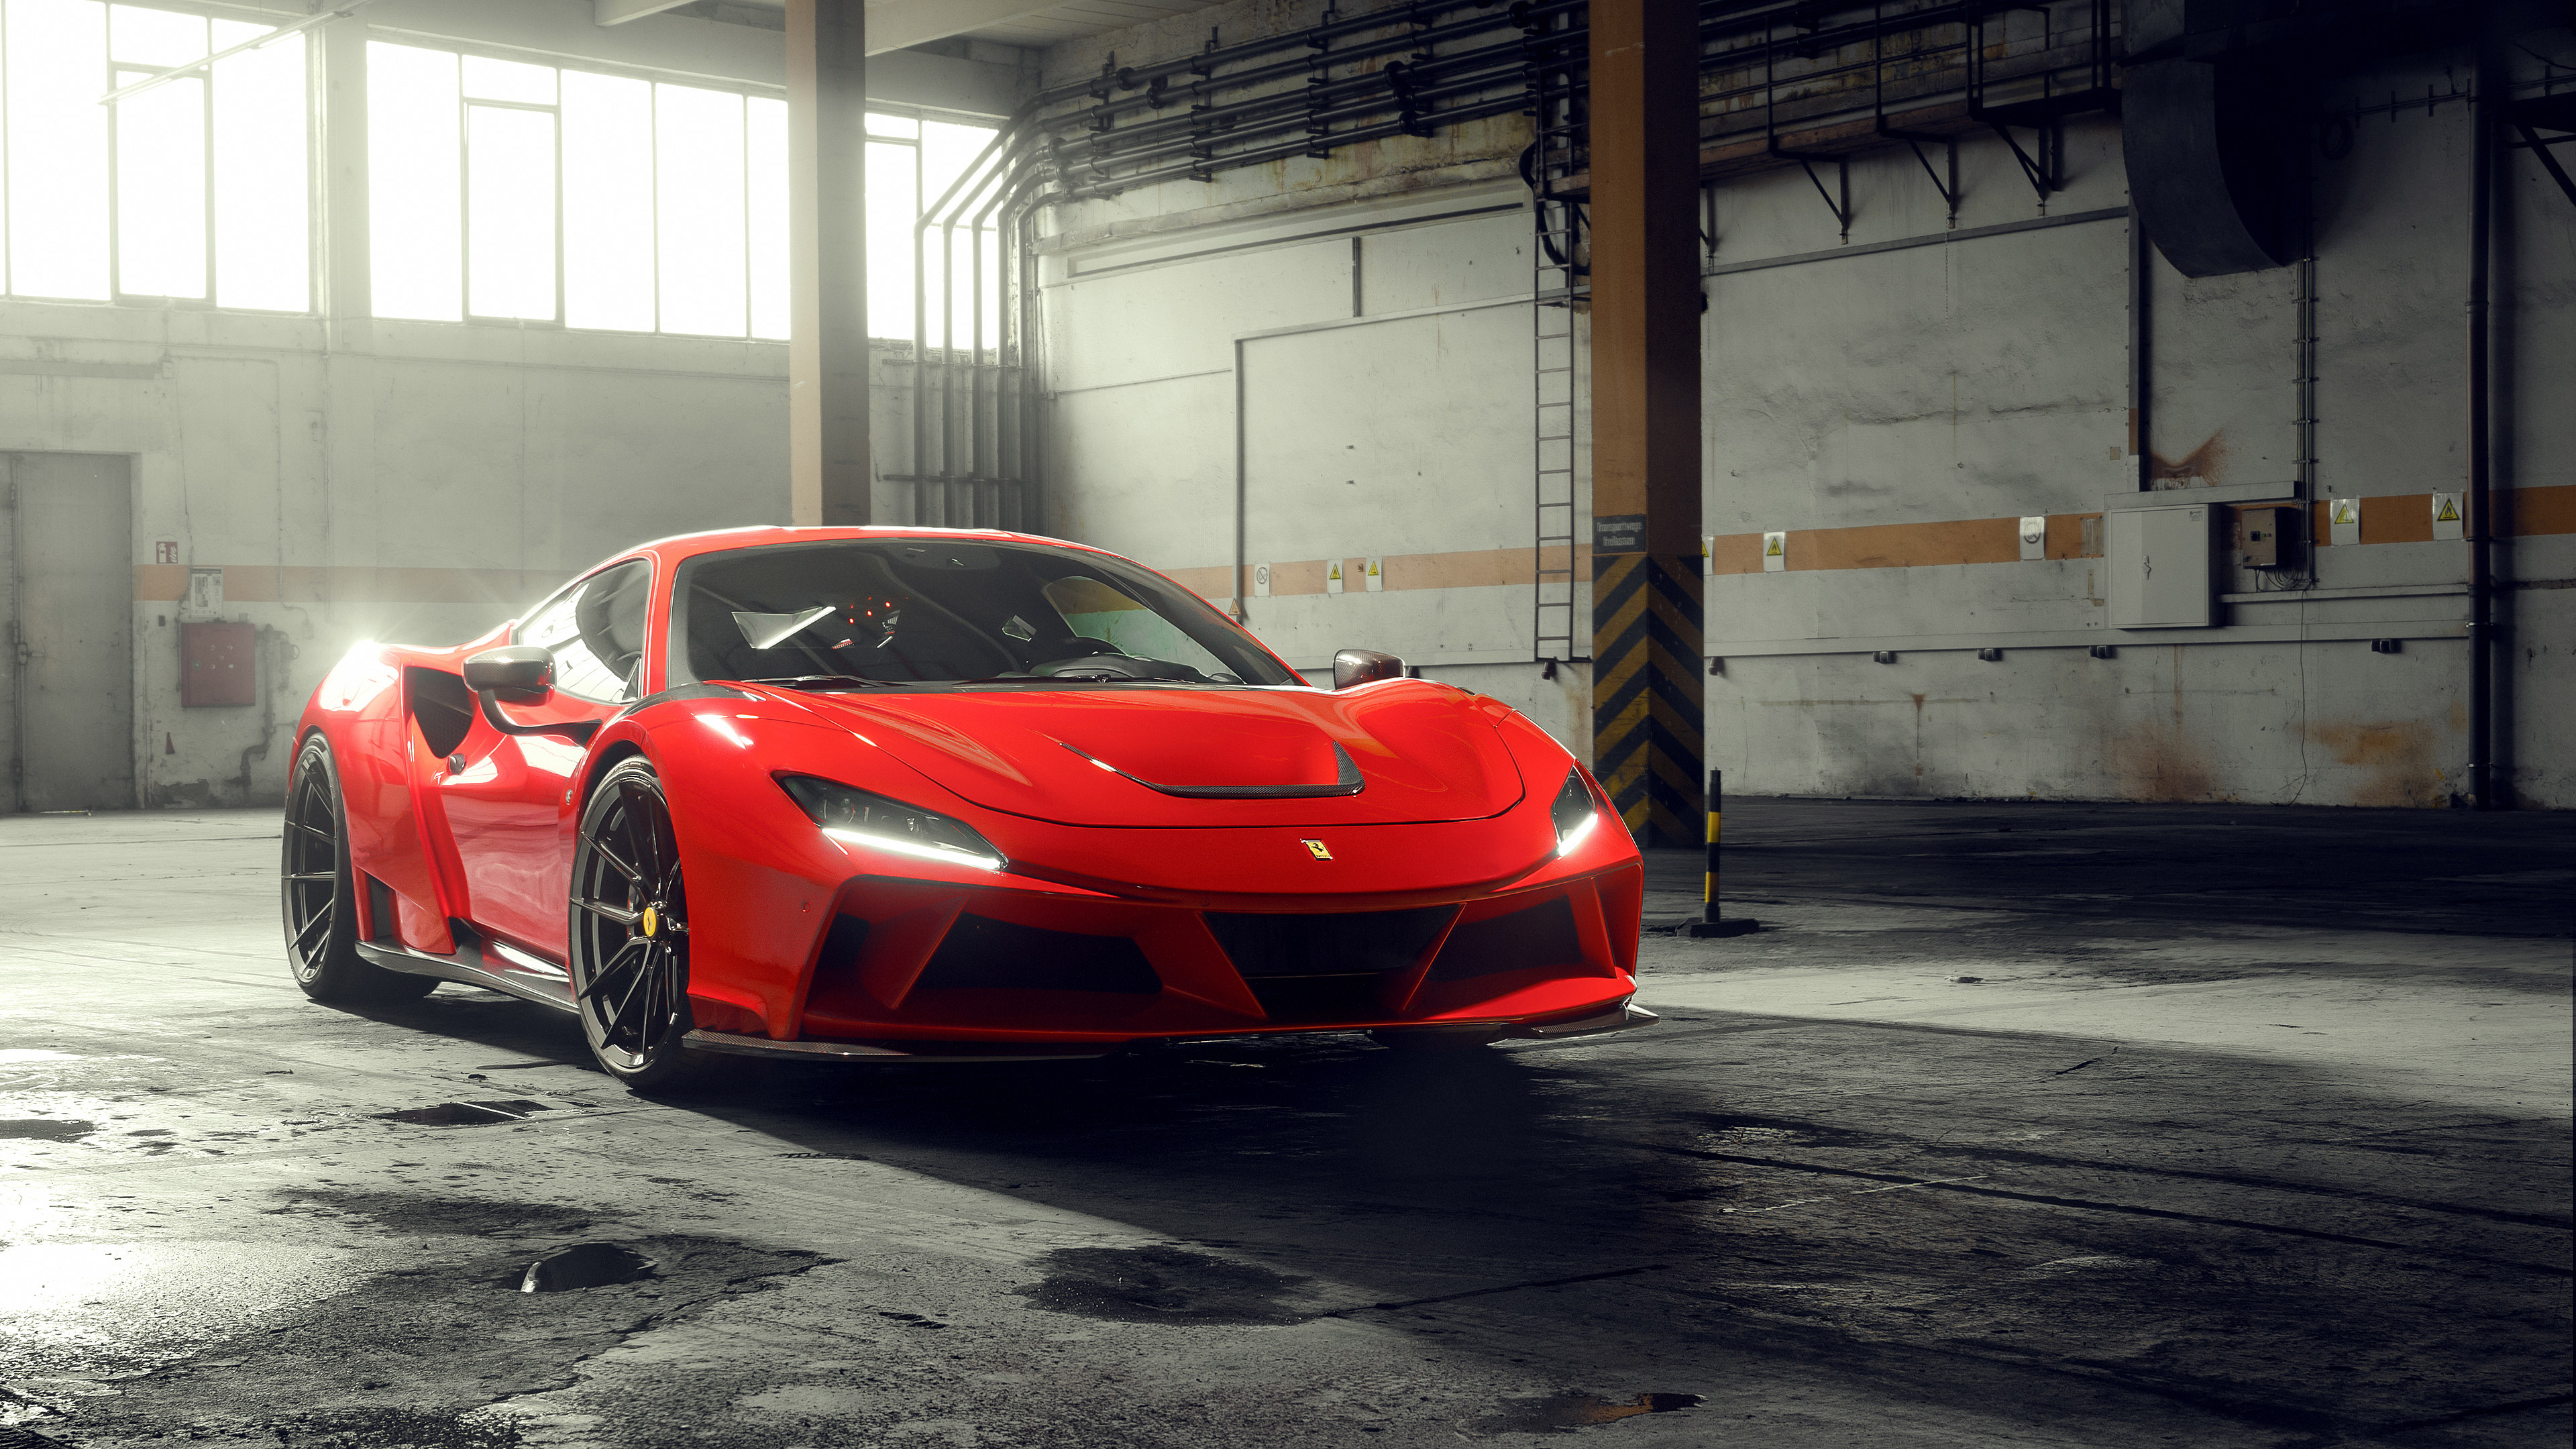 Ferrari F8, HD wallpapers, Car backgrounds, Auto images, 3840x2160 4K Desktop